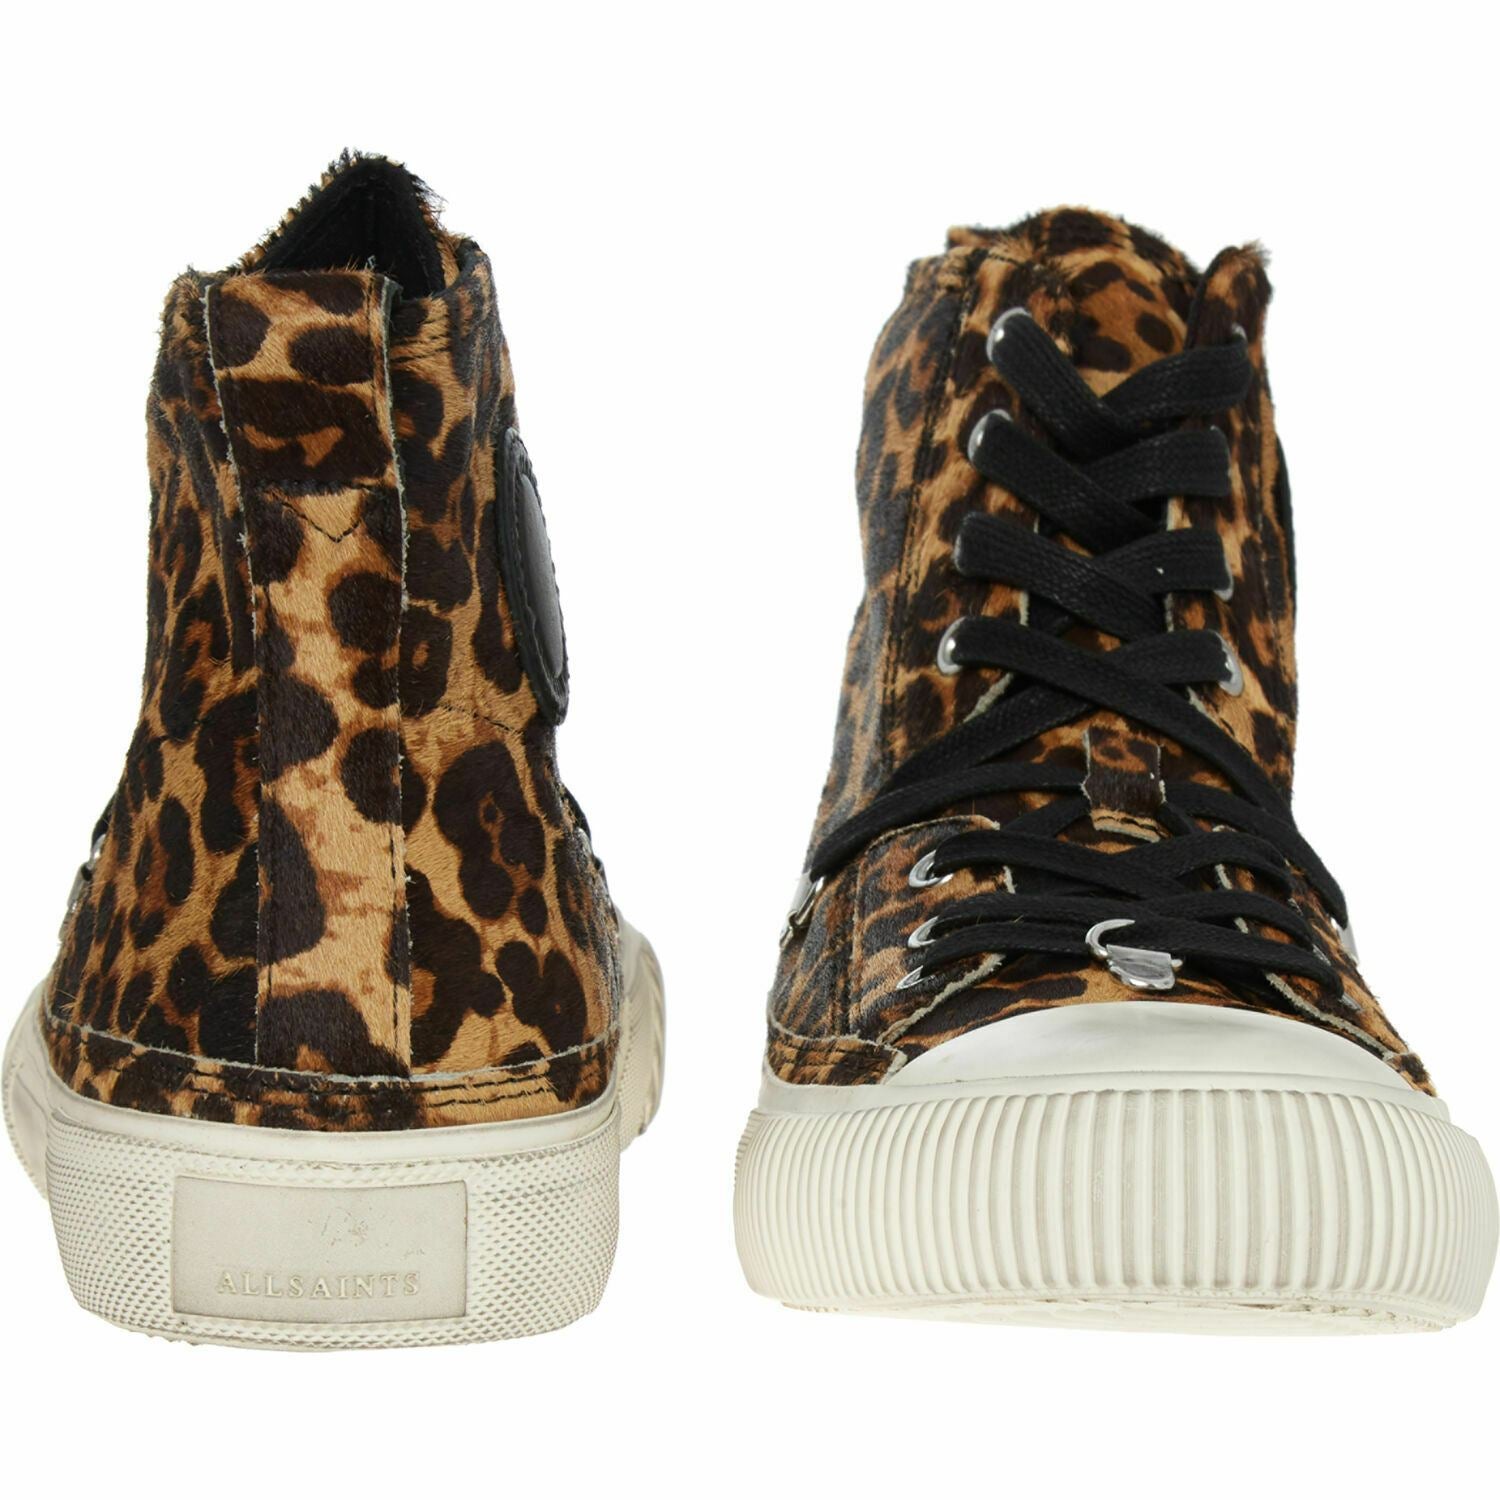 ALLSAINTS Womens ELENA Leopard Calf Hair Hi Top Trainers Sneakers size UK 6 EU39